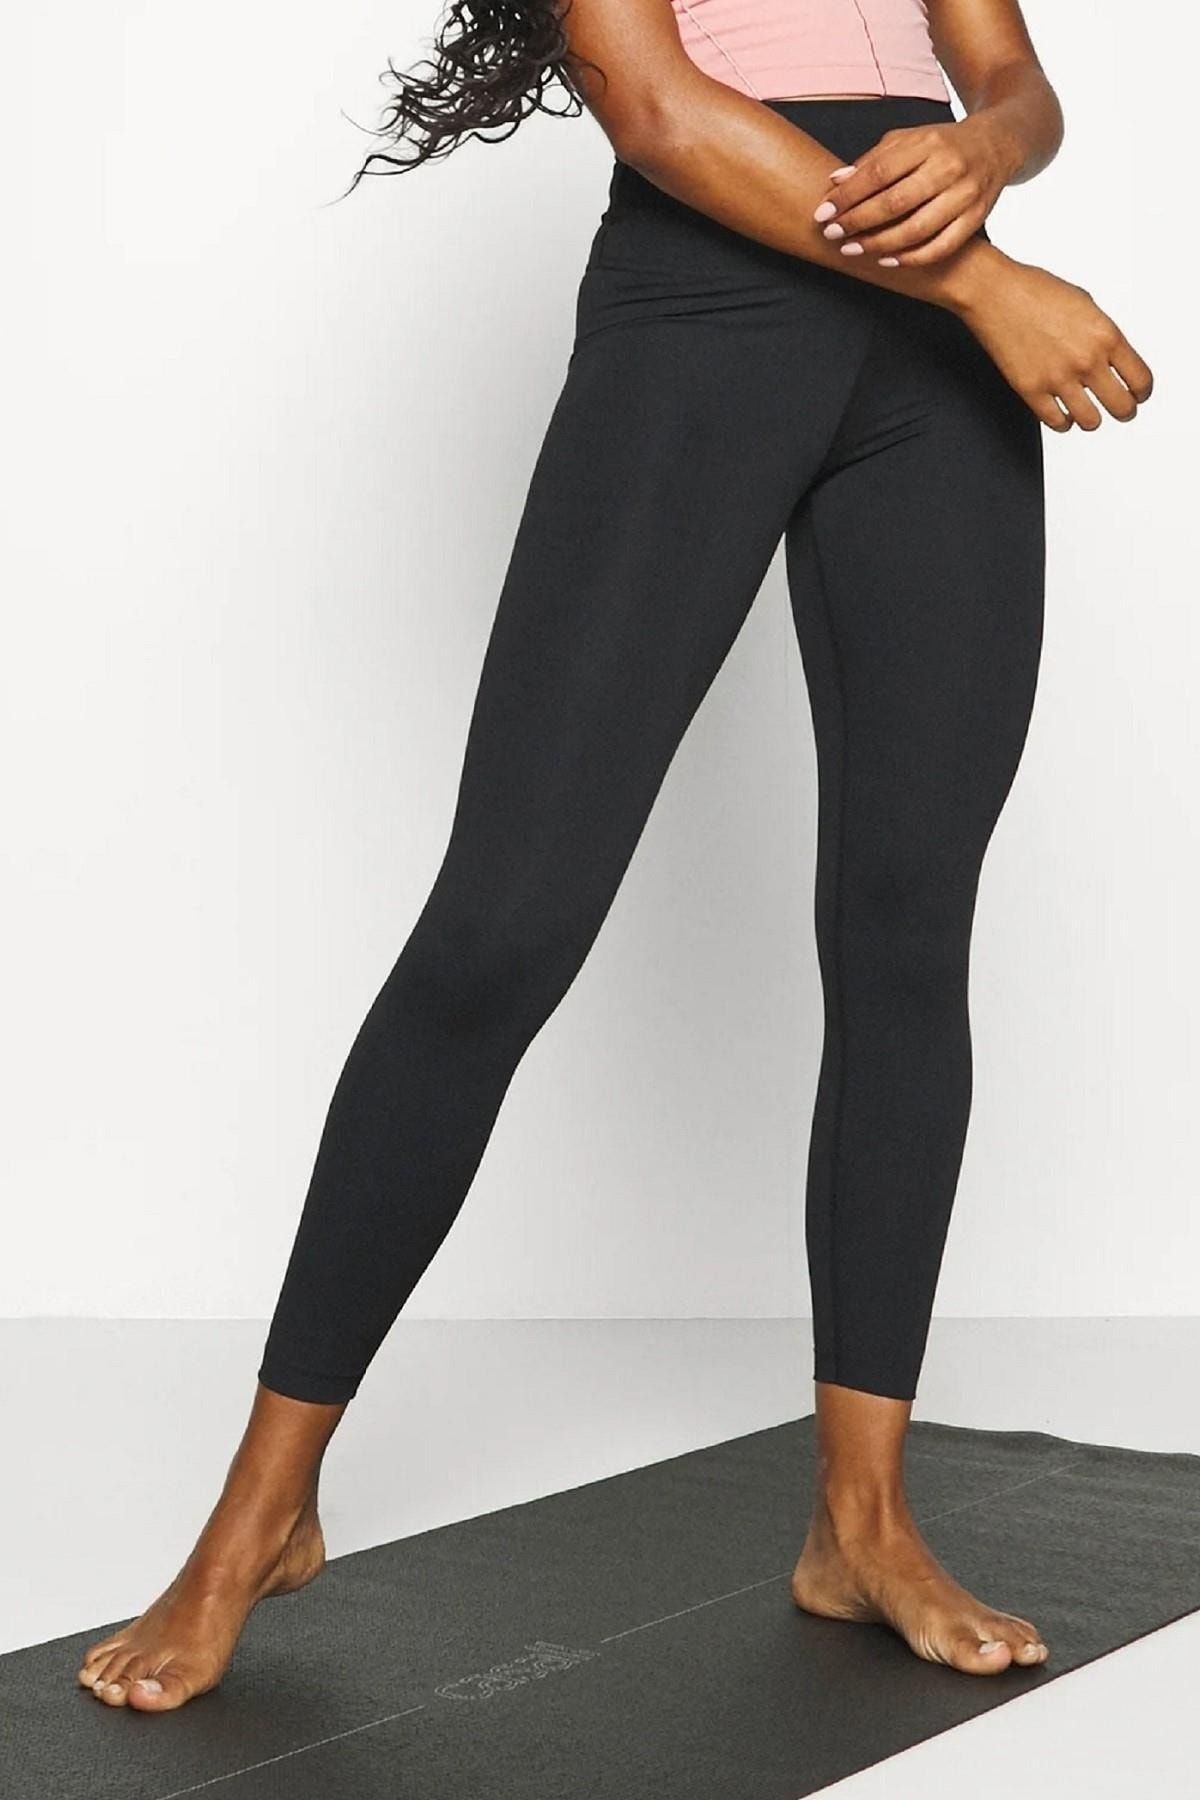 Nike Yoga 7/8 leggings in black